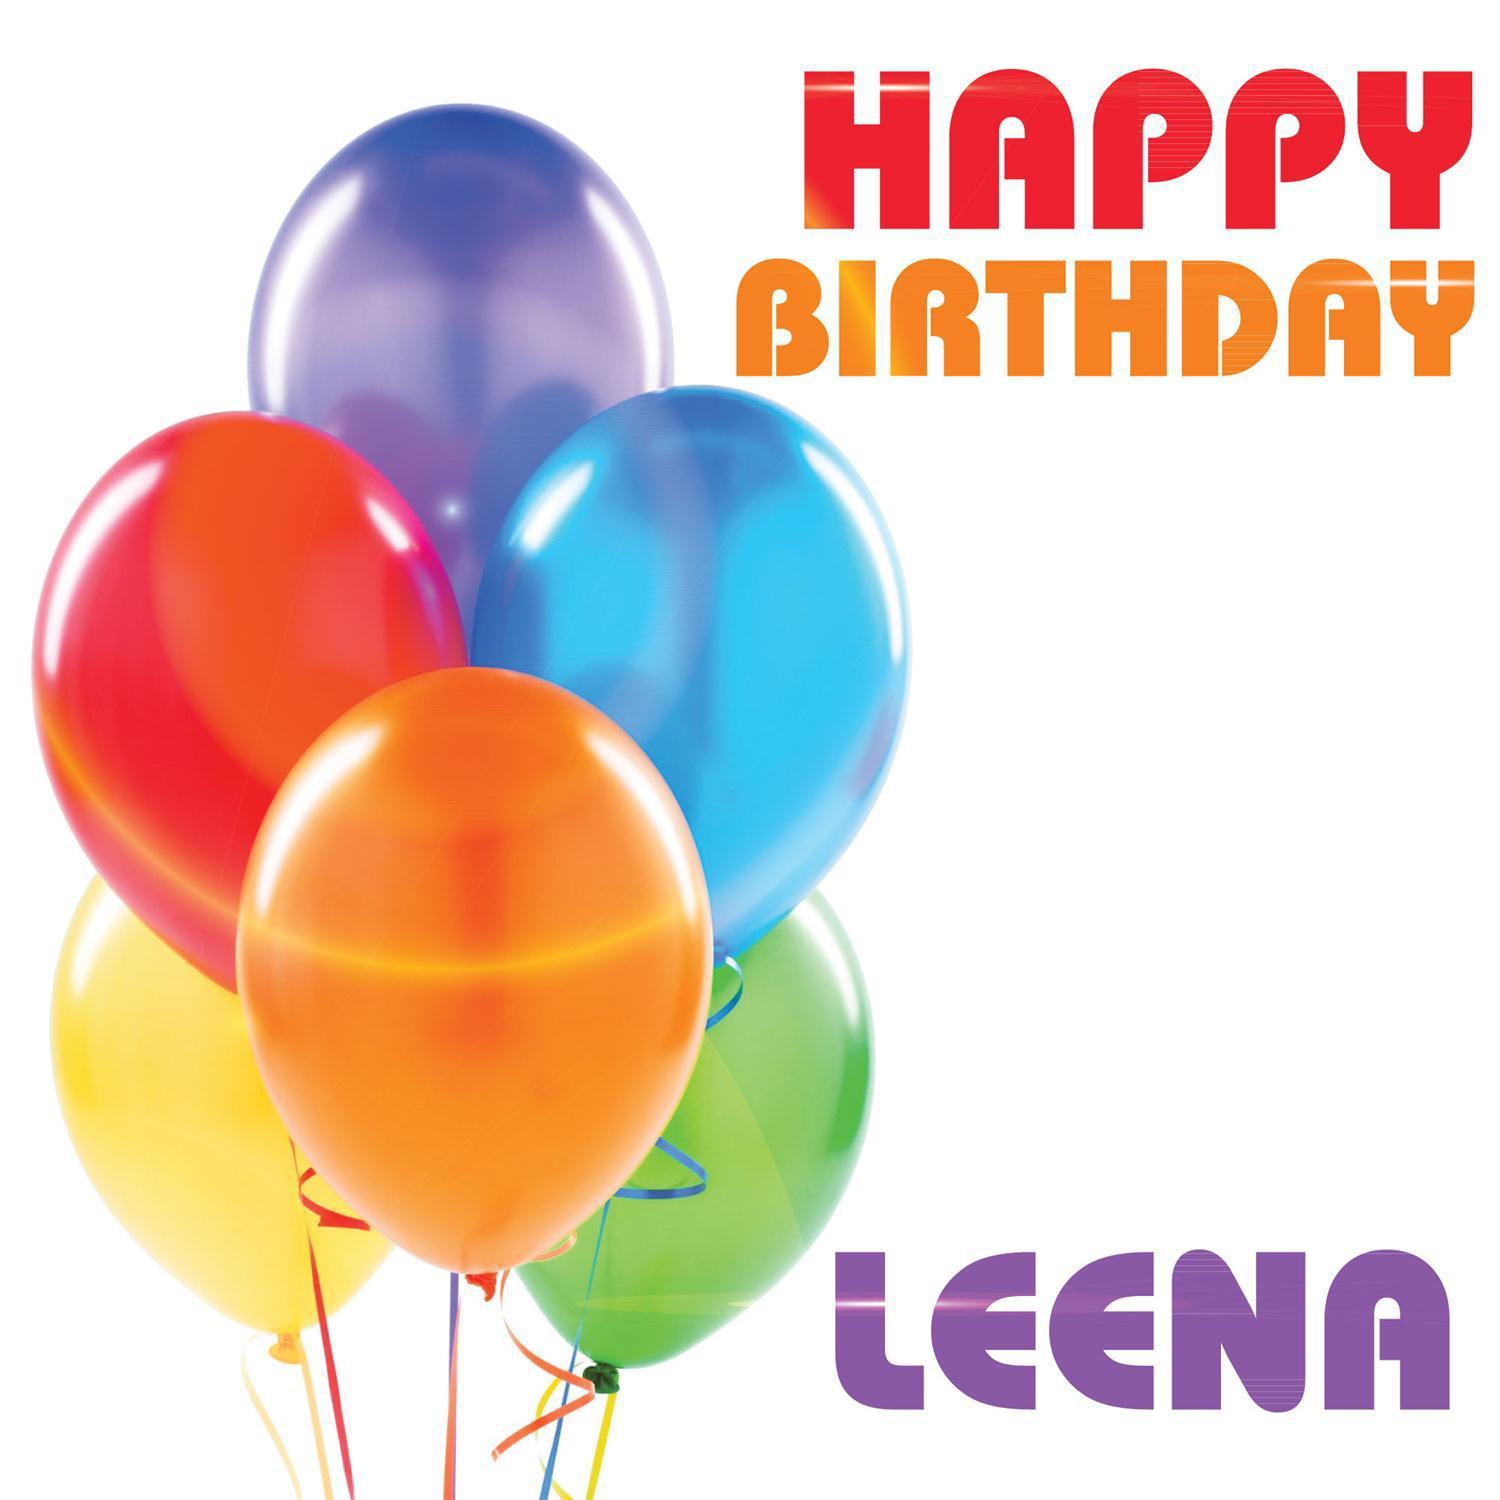 Happy Birthday Leena